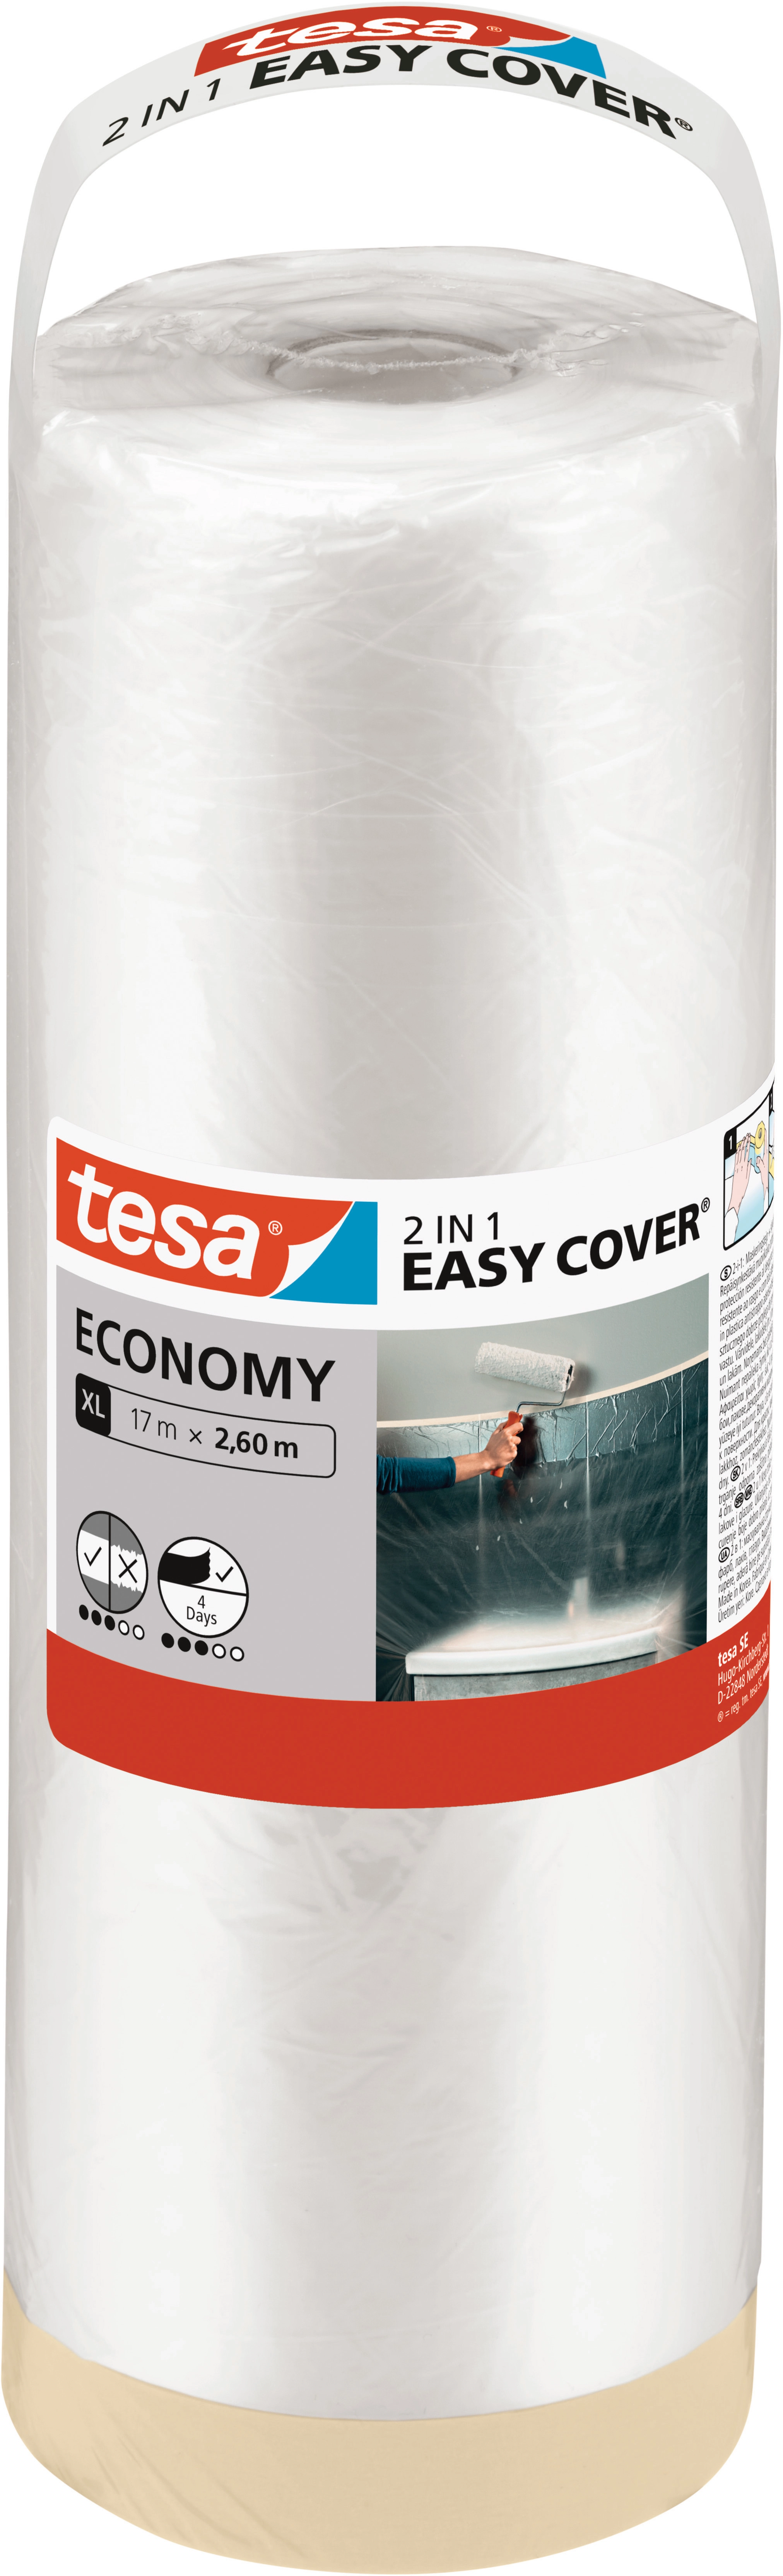 Tesa Abdeckfolie Easy Cover Economy XL inkl. Klebeband kaufen bei OBI